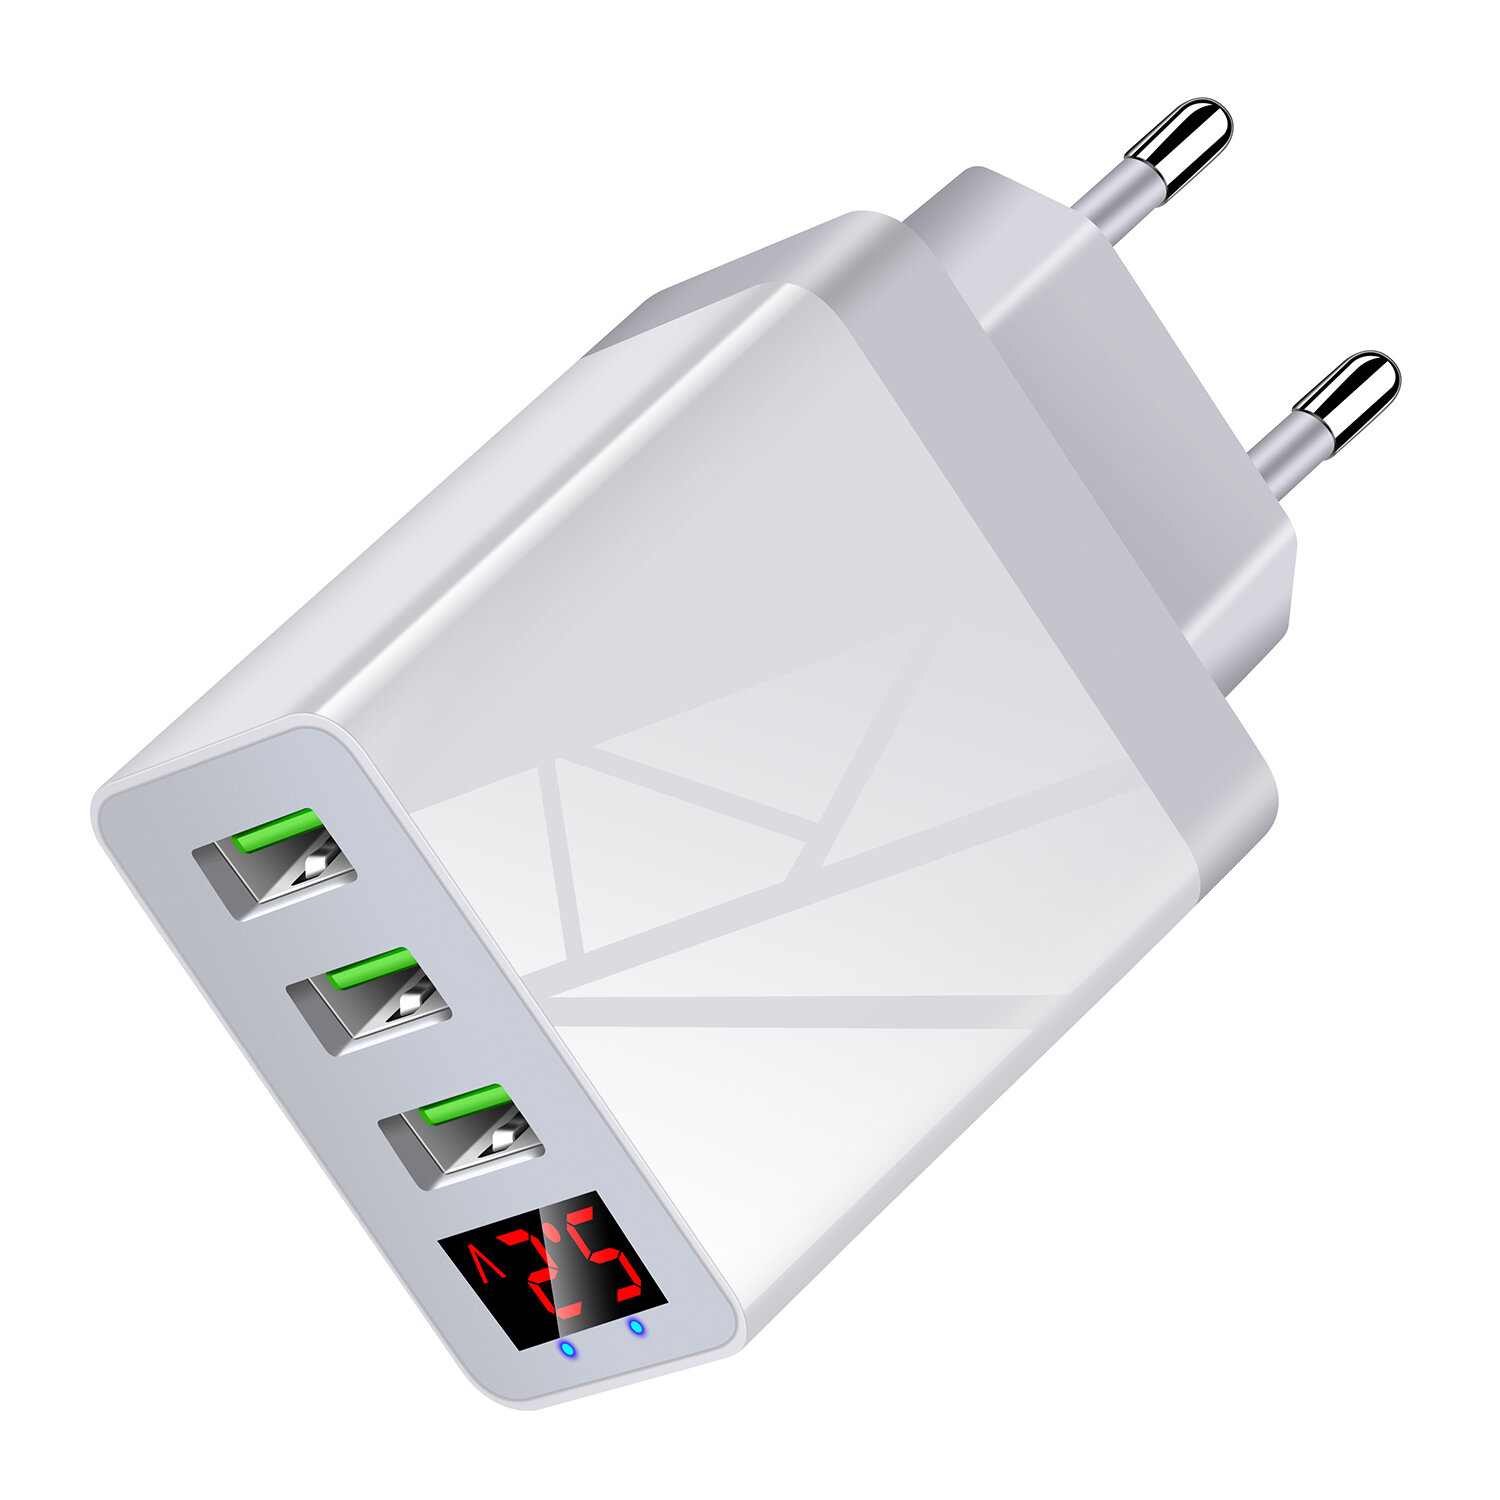 Bakeey 3 USB-oplader LED-display Reis-wandoplader EU-stekkeradapter Snel opladen voor iPhone 12 Pro 